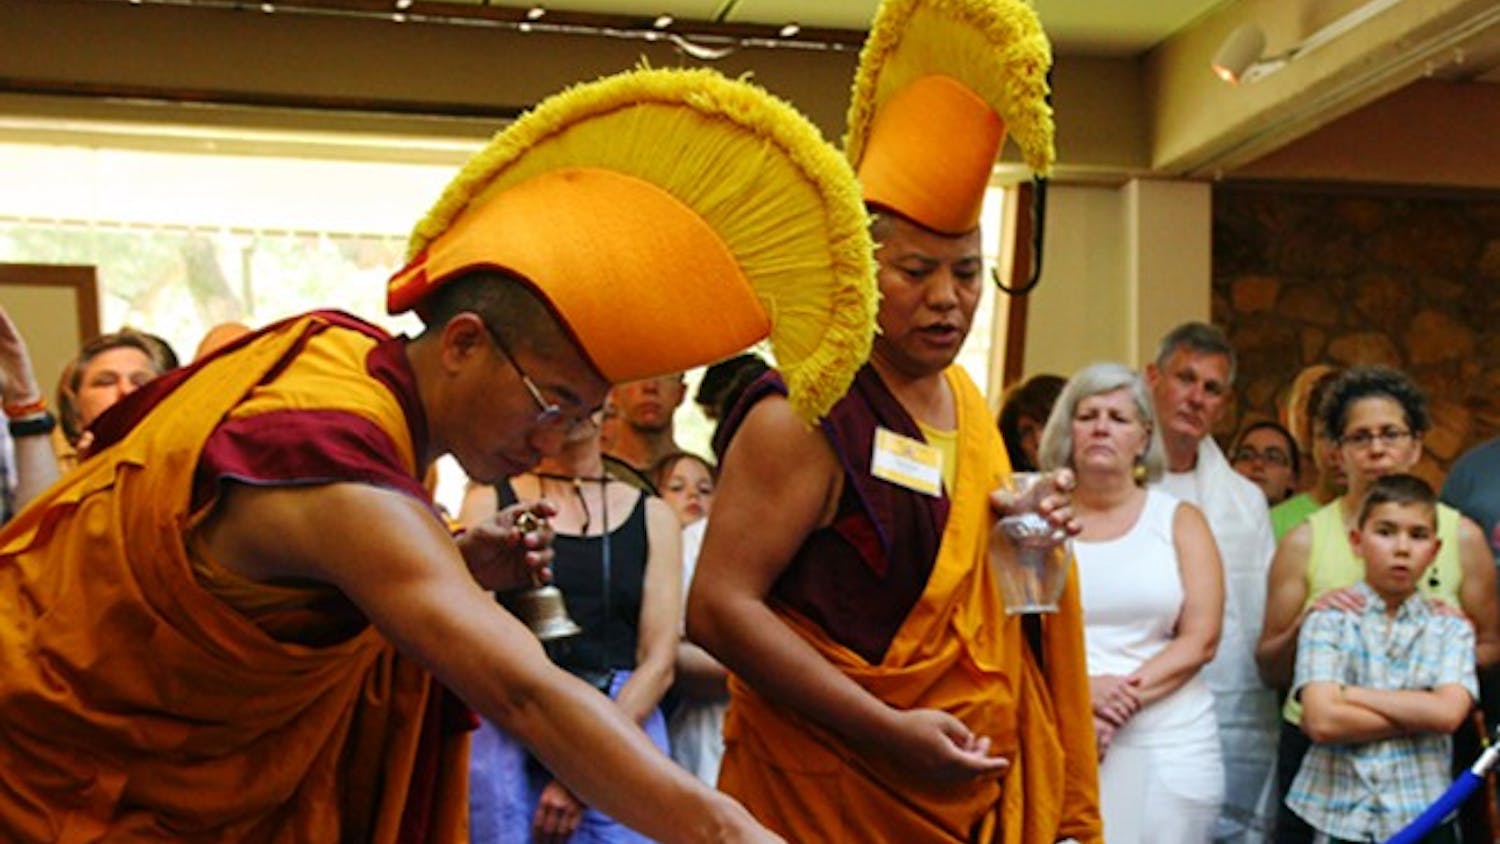 Photo: Tibetan monks spread culture, message through Sacred Arts Tour (Paula Seligson)